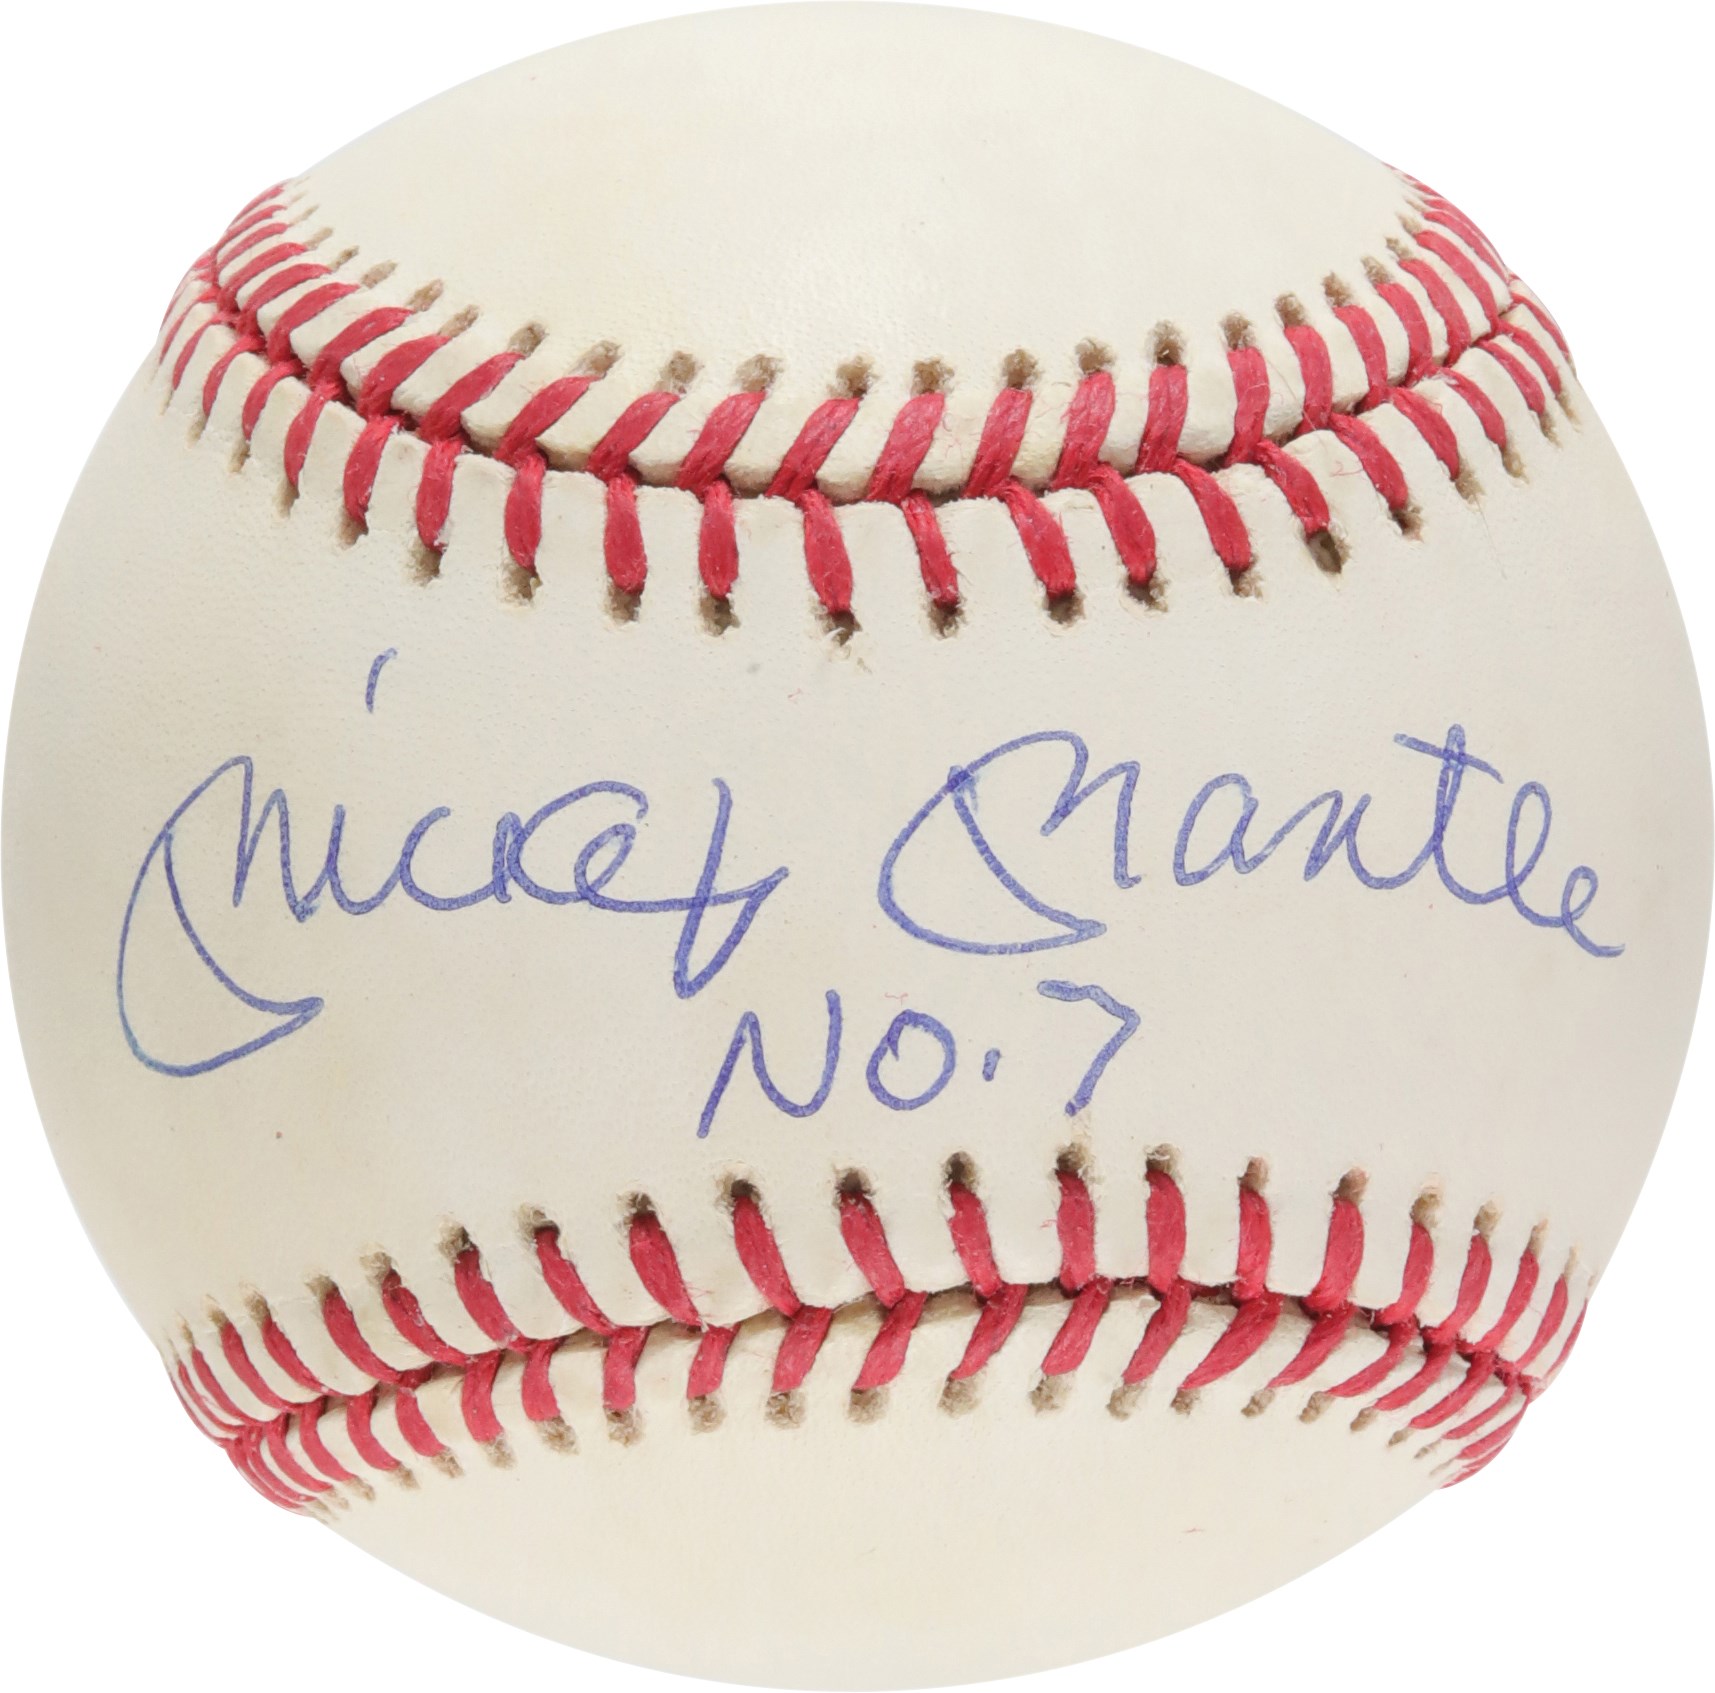 Baseball Autographs - Mickey Mantle "No. 7" Single-Signed Baseball (PSA MINT 9 Signature)